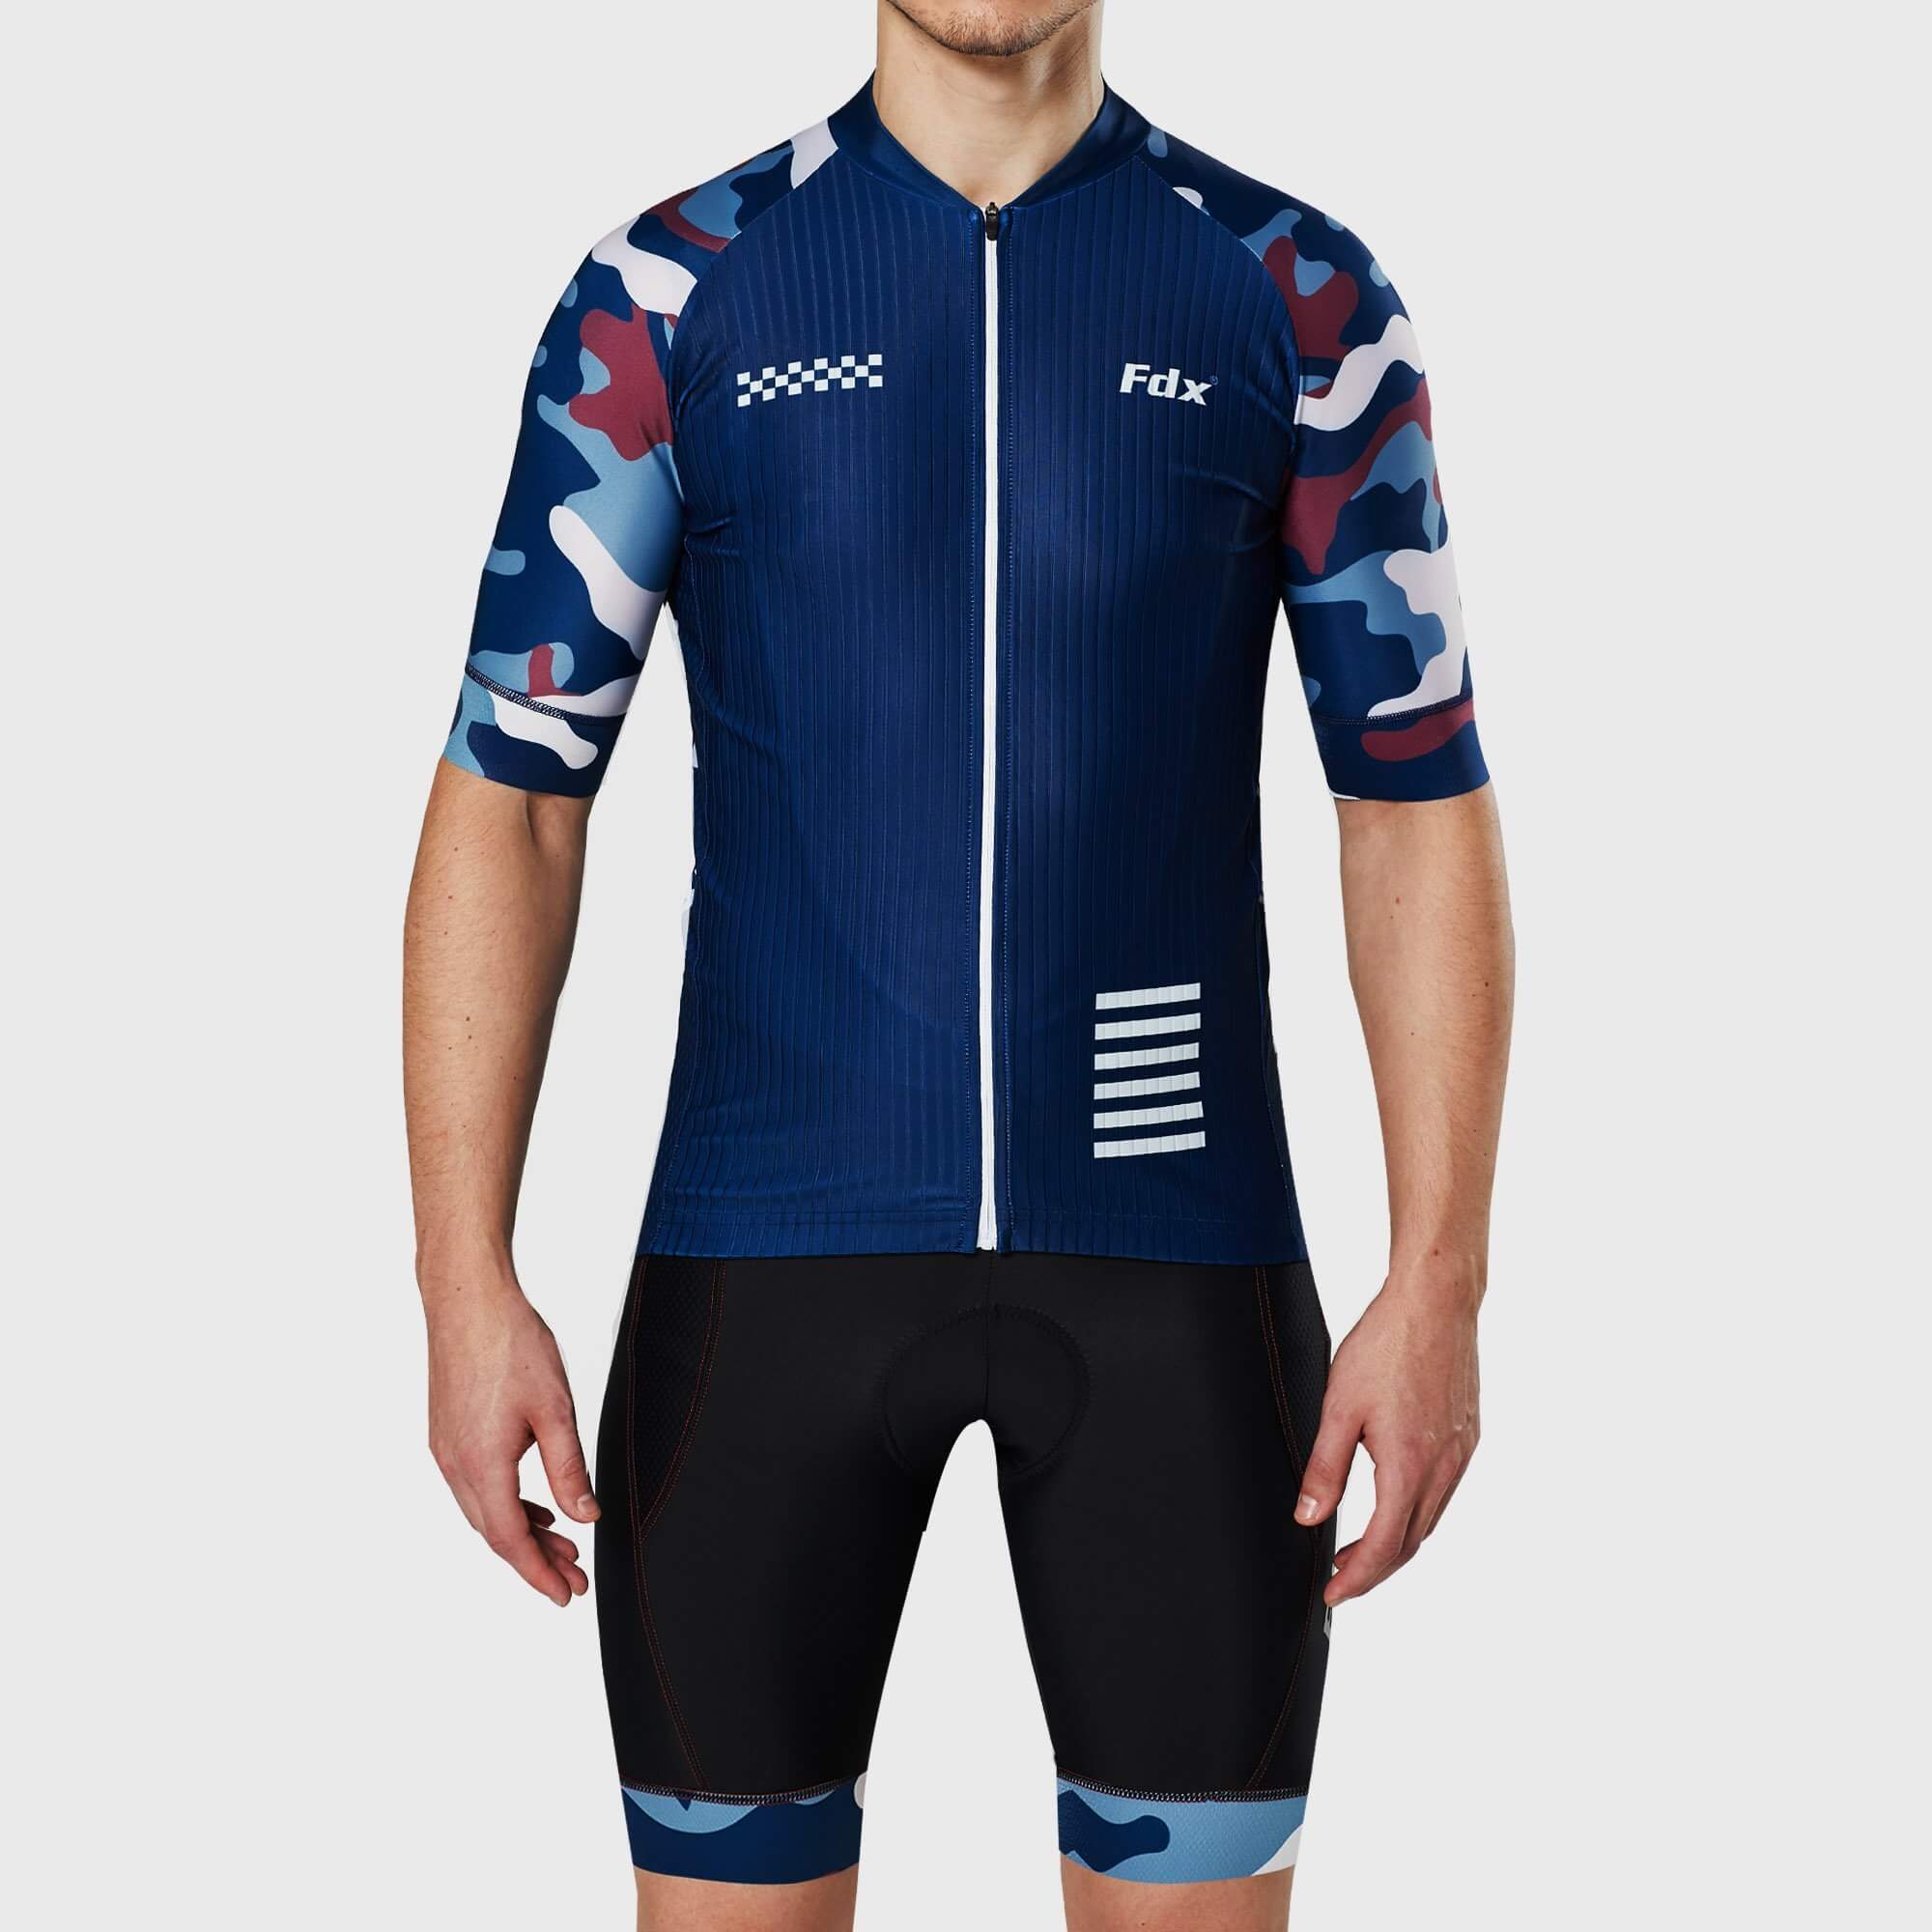 Fdx Mens Blue Short Sleeve Cycling Jersey & Gel Padded Bib Shorts Best Summer Road Bike Wear Light Weight, Hi-viz Reflectors & Pockets - Camouflage